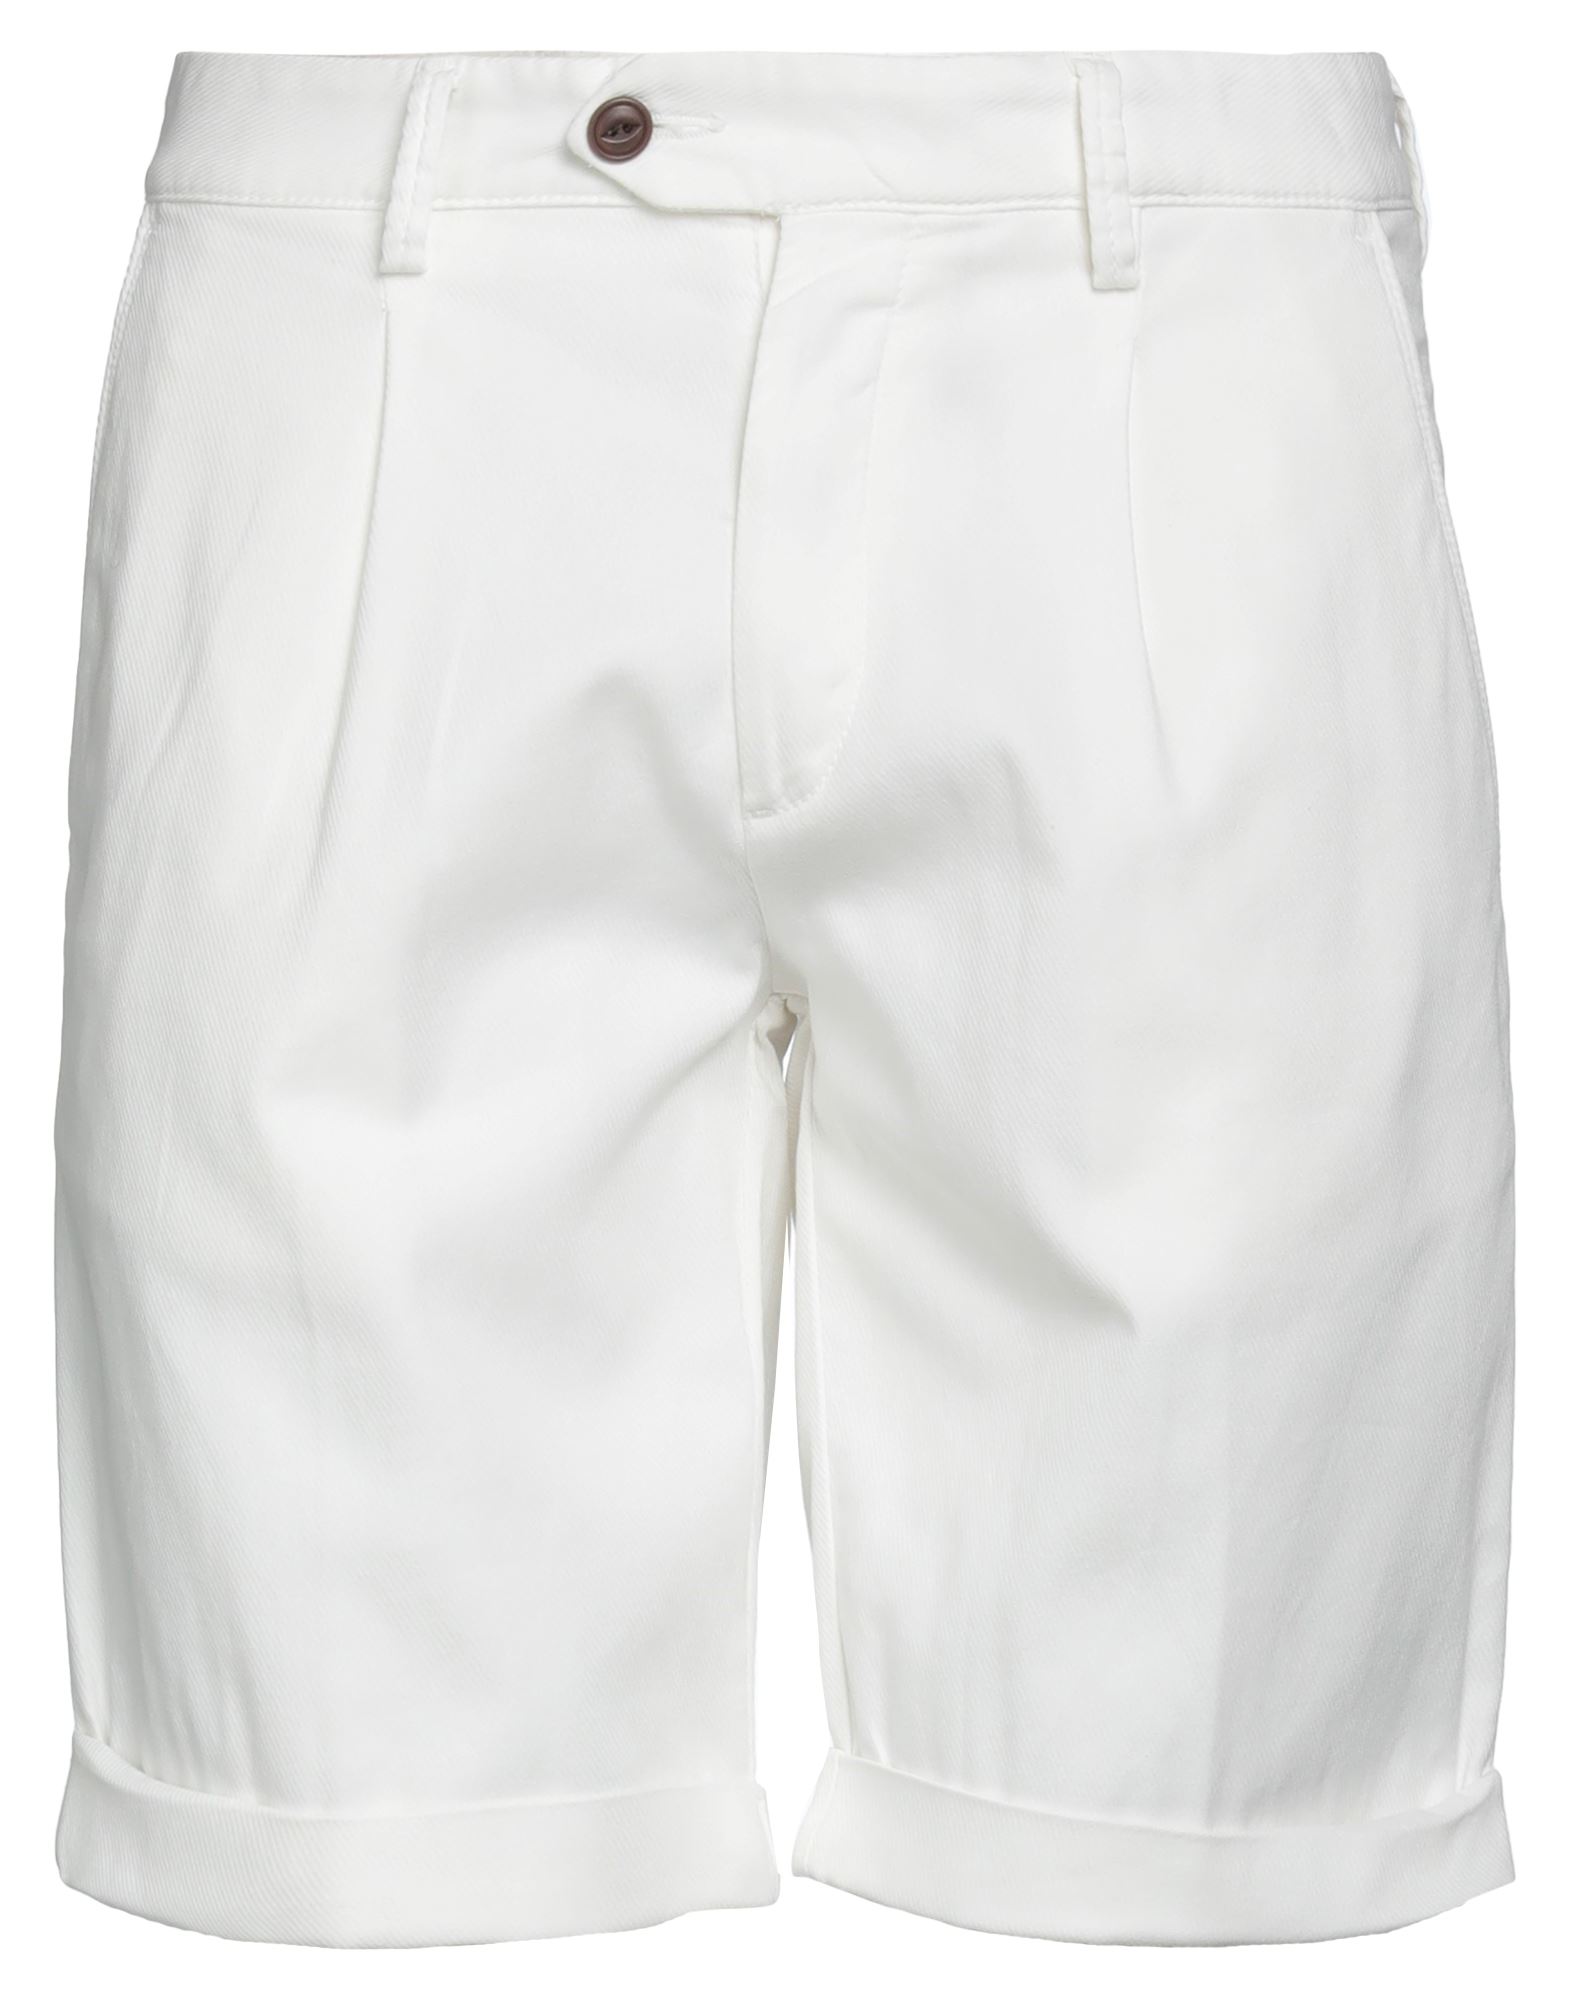 MODFITTERS Shorts & Bermuda Shorts